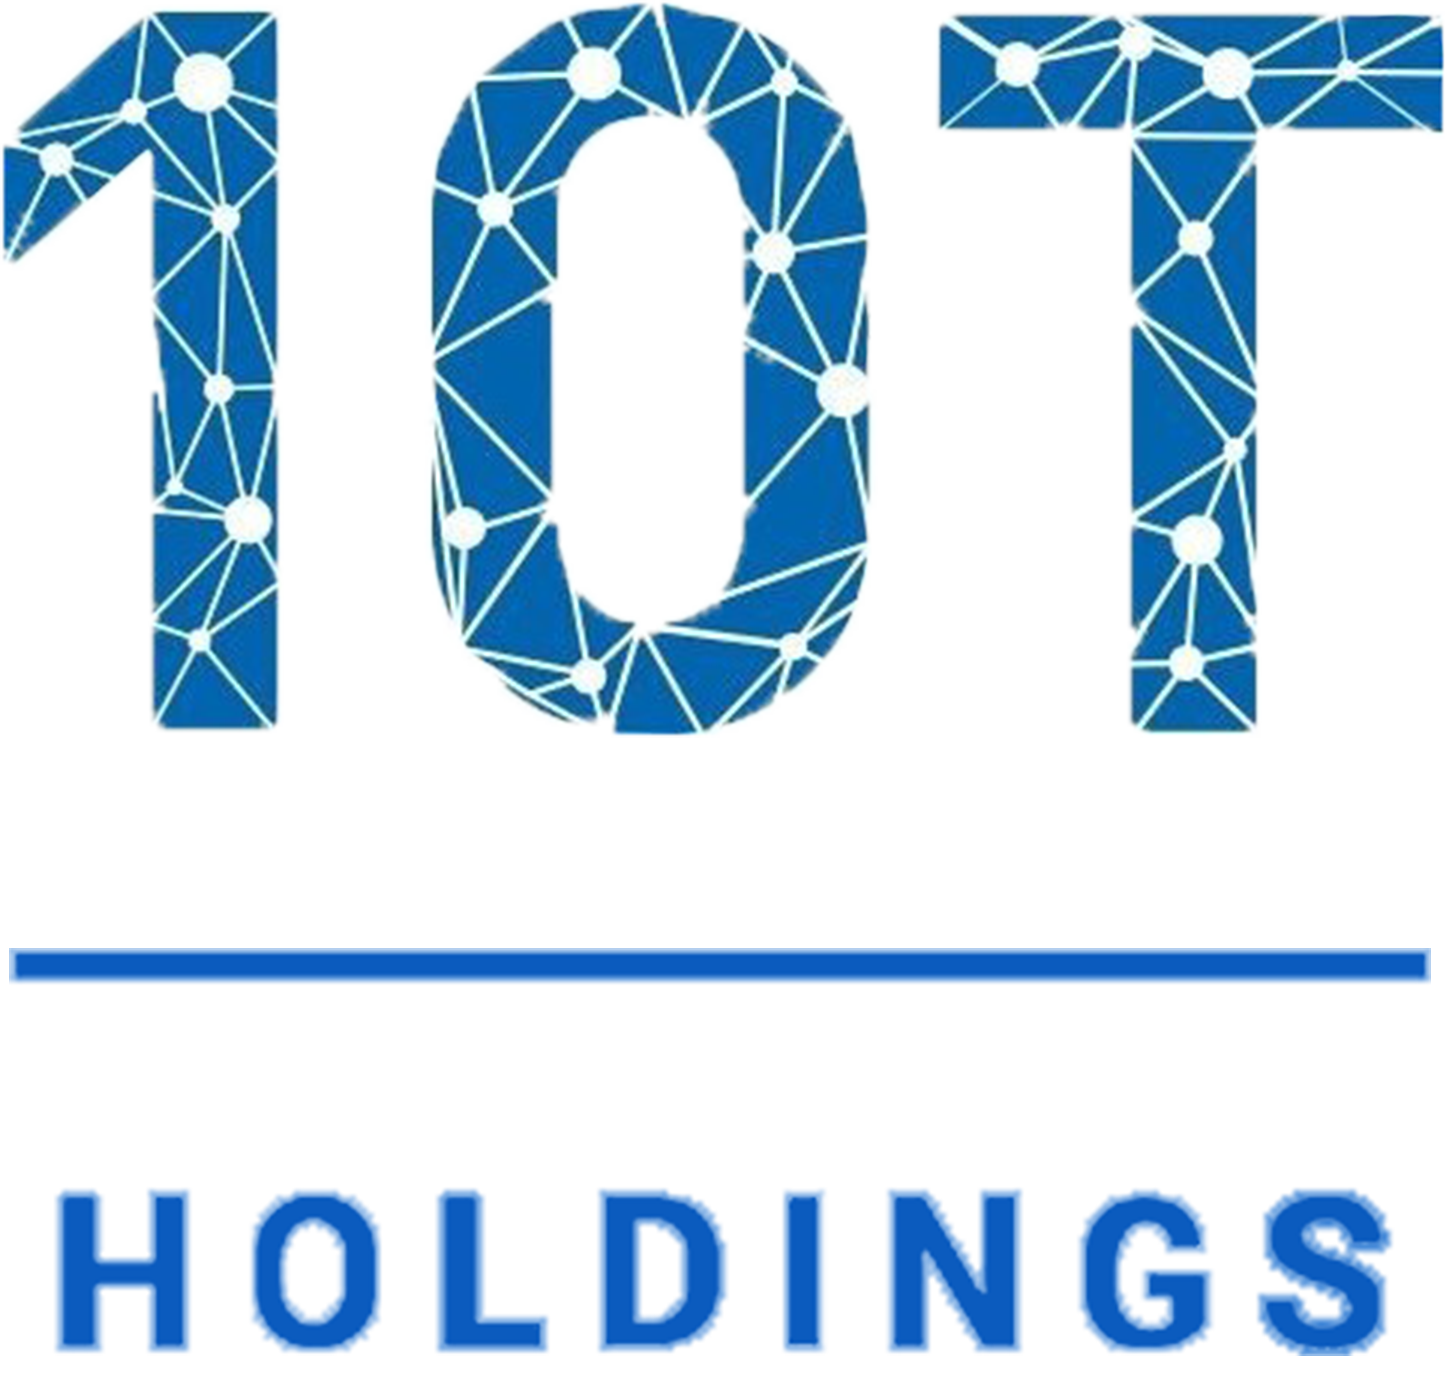 10t holdings logo 3x